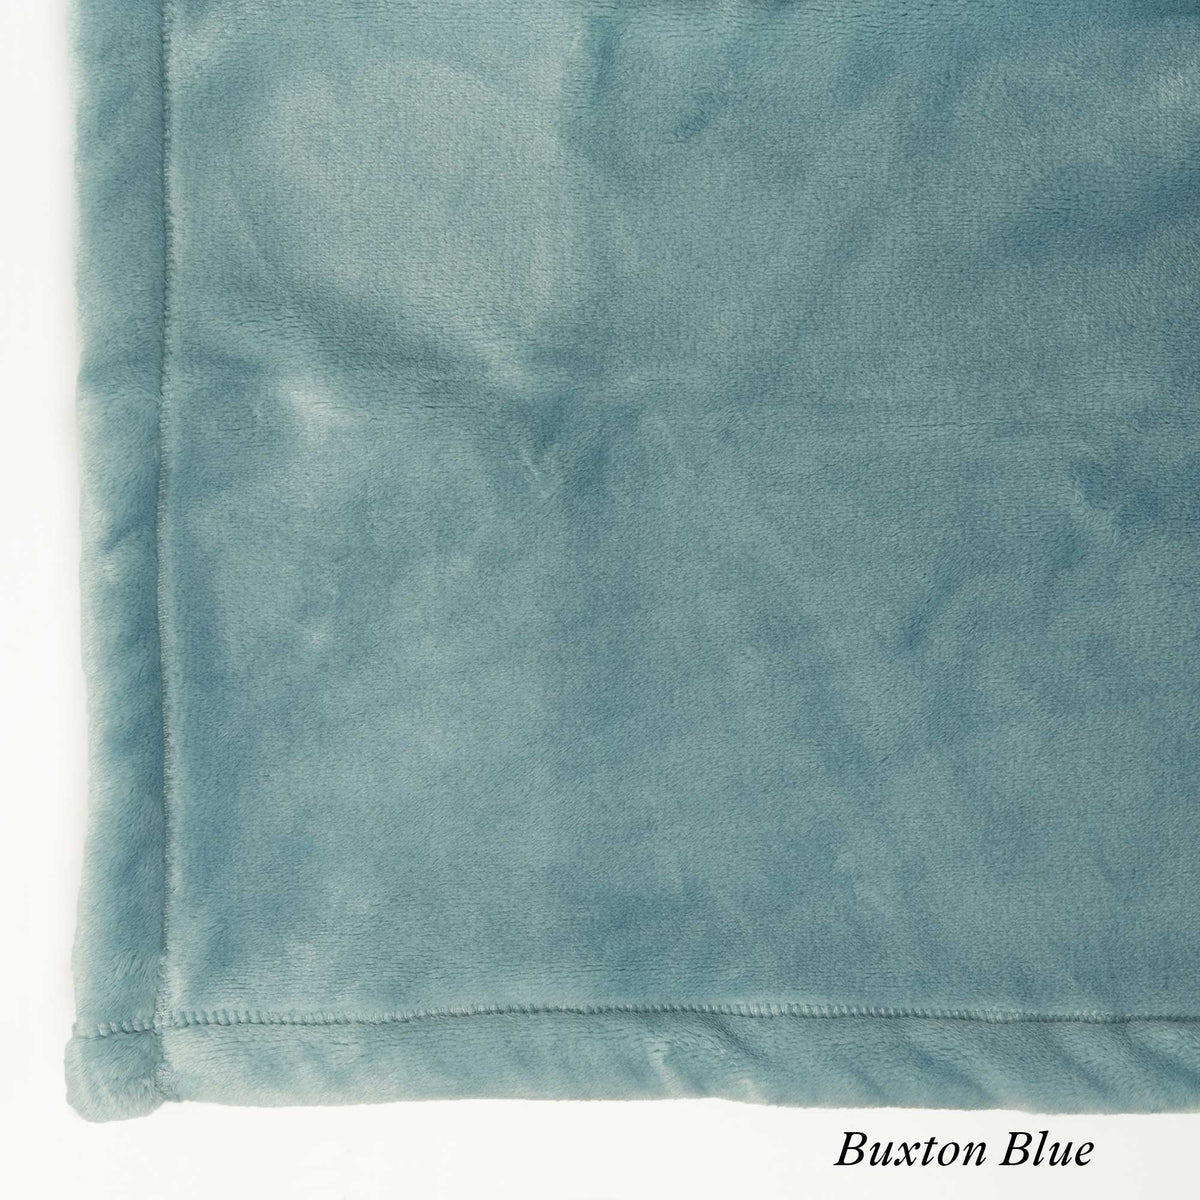 Buxton Blue Luster Loft Fleece Swatch - Luster Loft Fleece Throw Pillows - American blanket company 